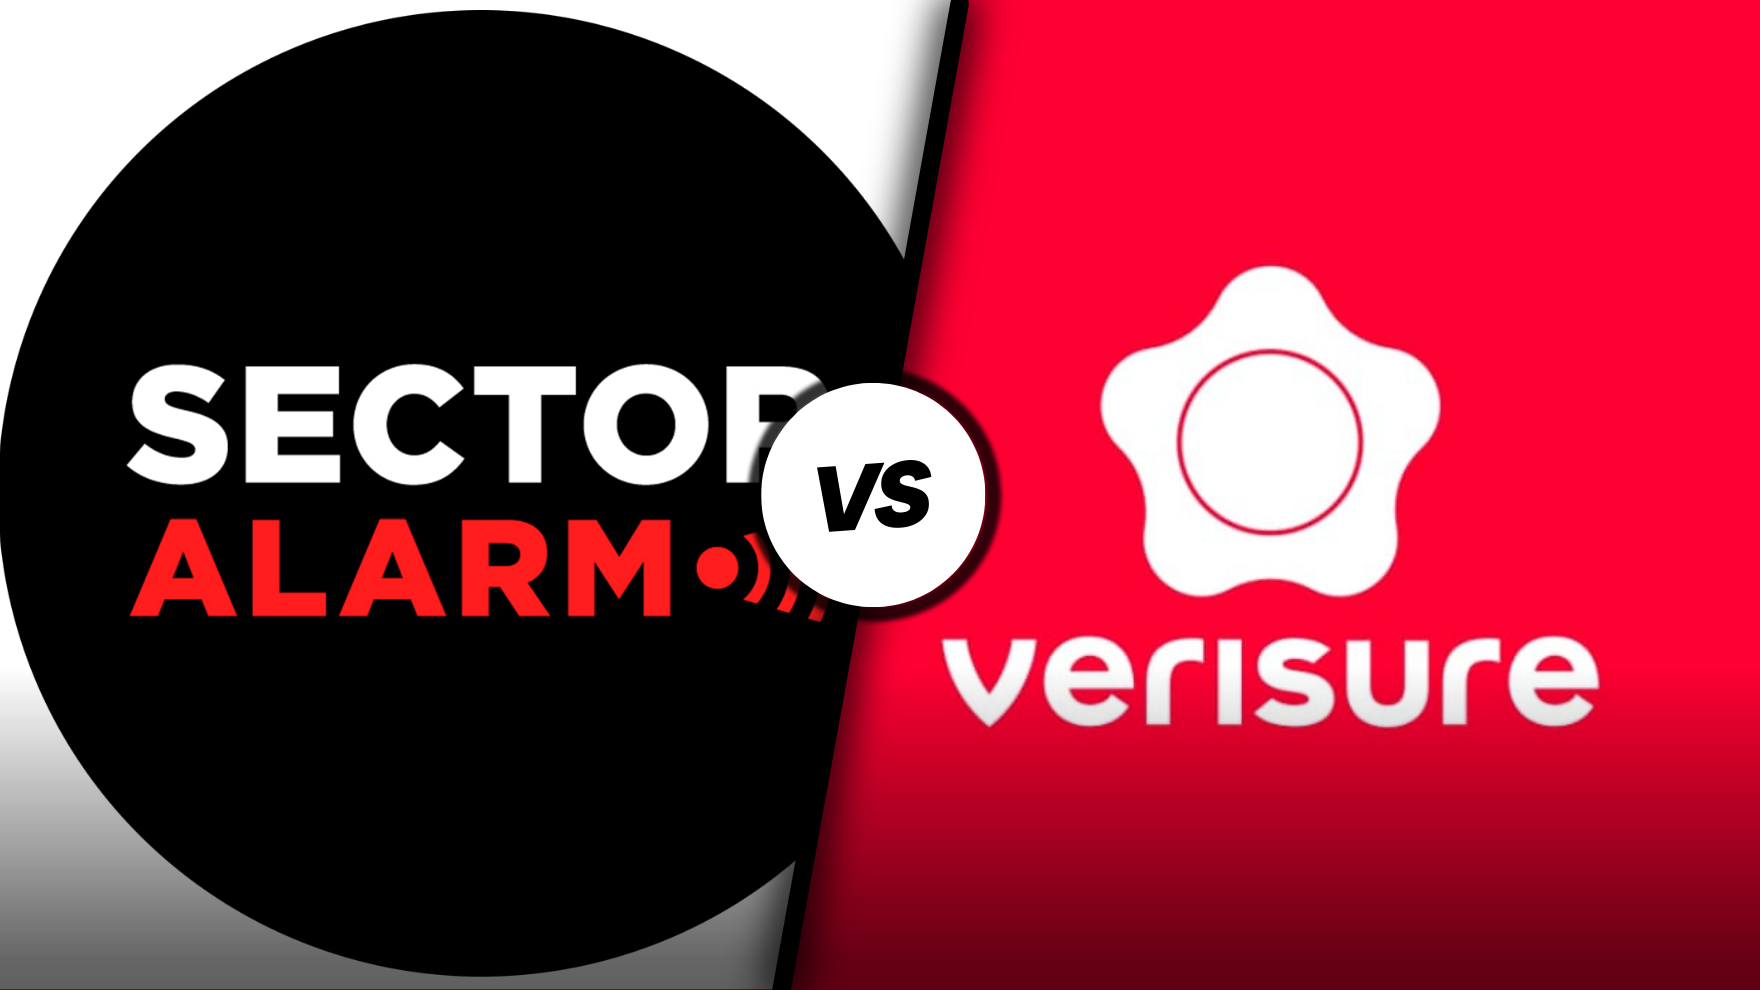 sector alarm vs verisure